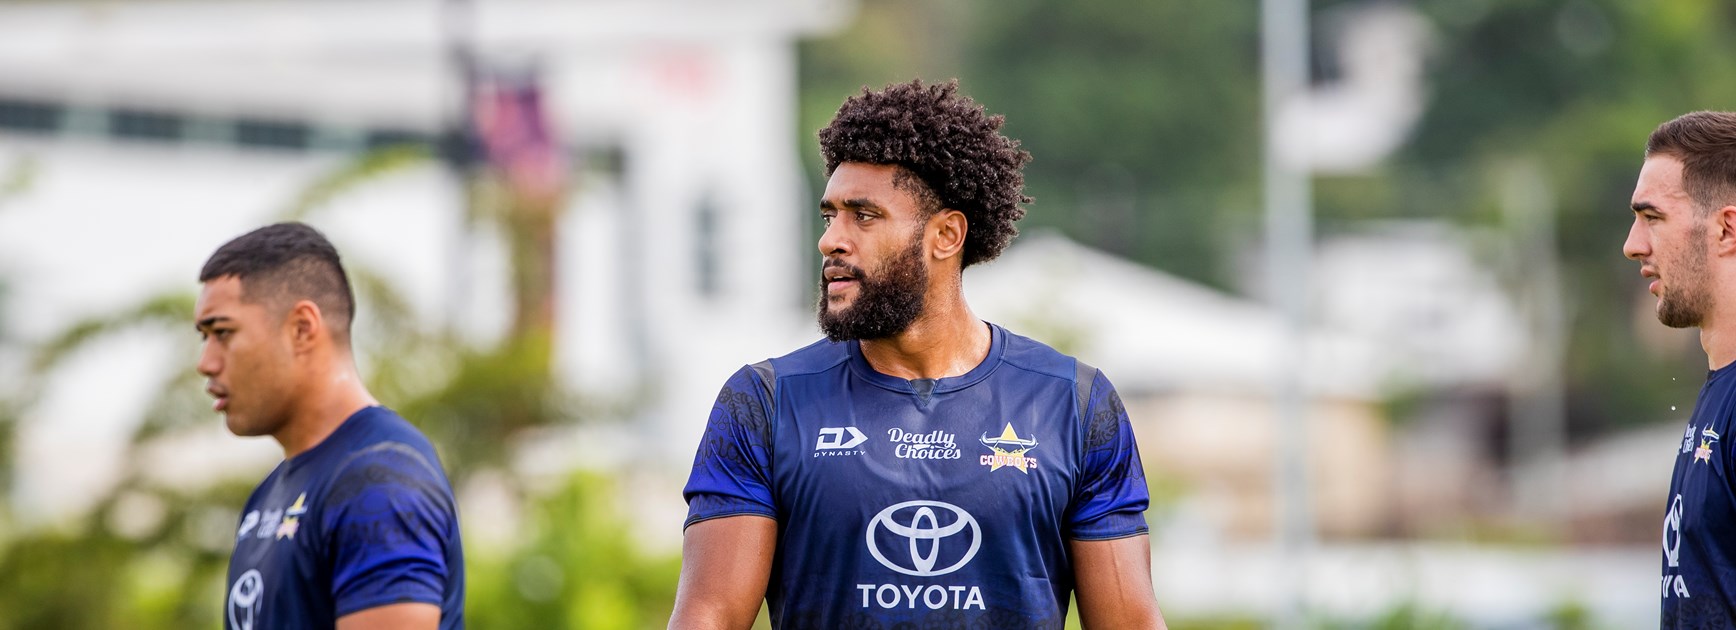 Koroisau, Campbell-Gillard named in star-studded Fiji World Cup squad